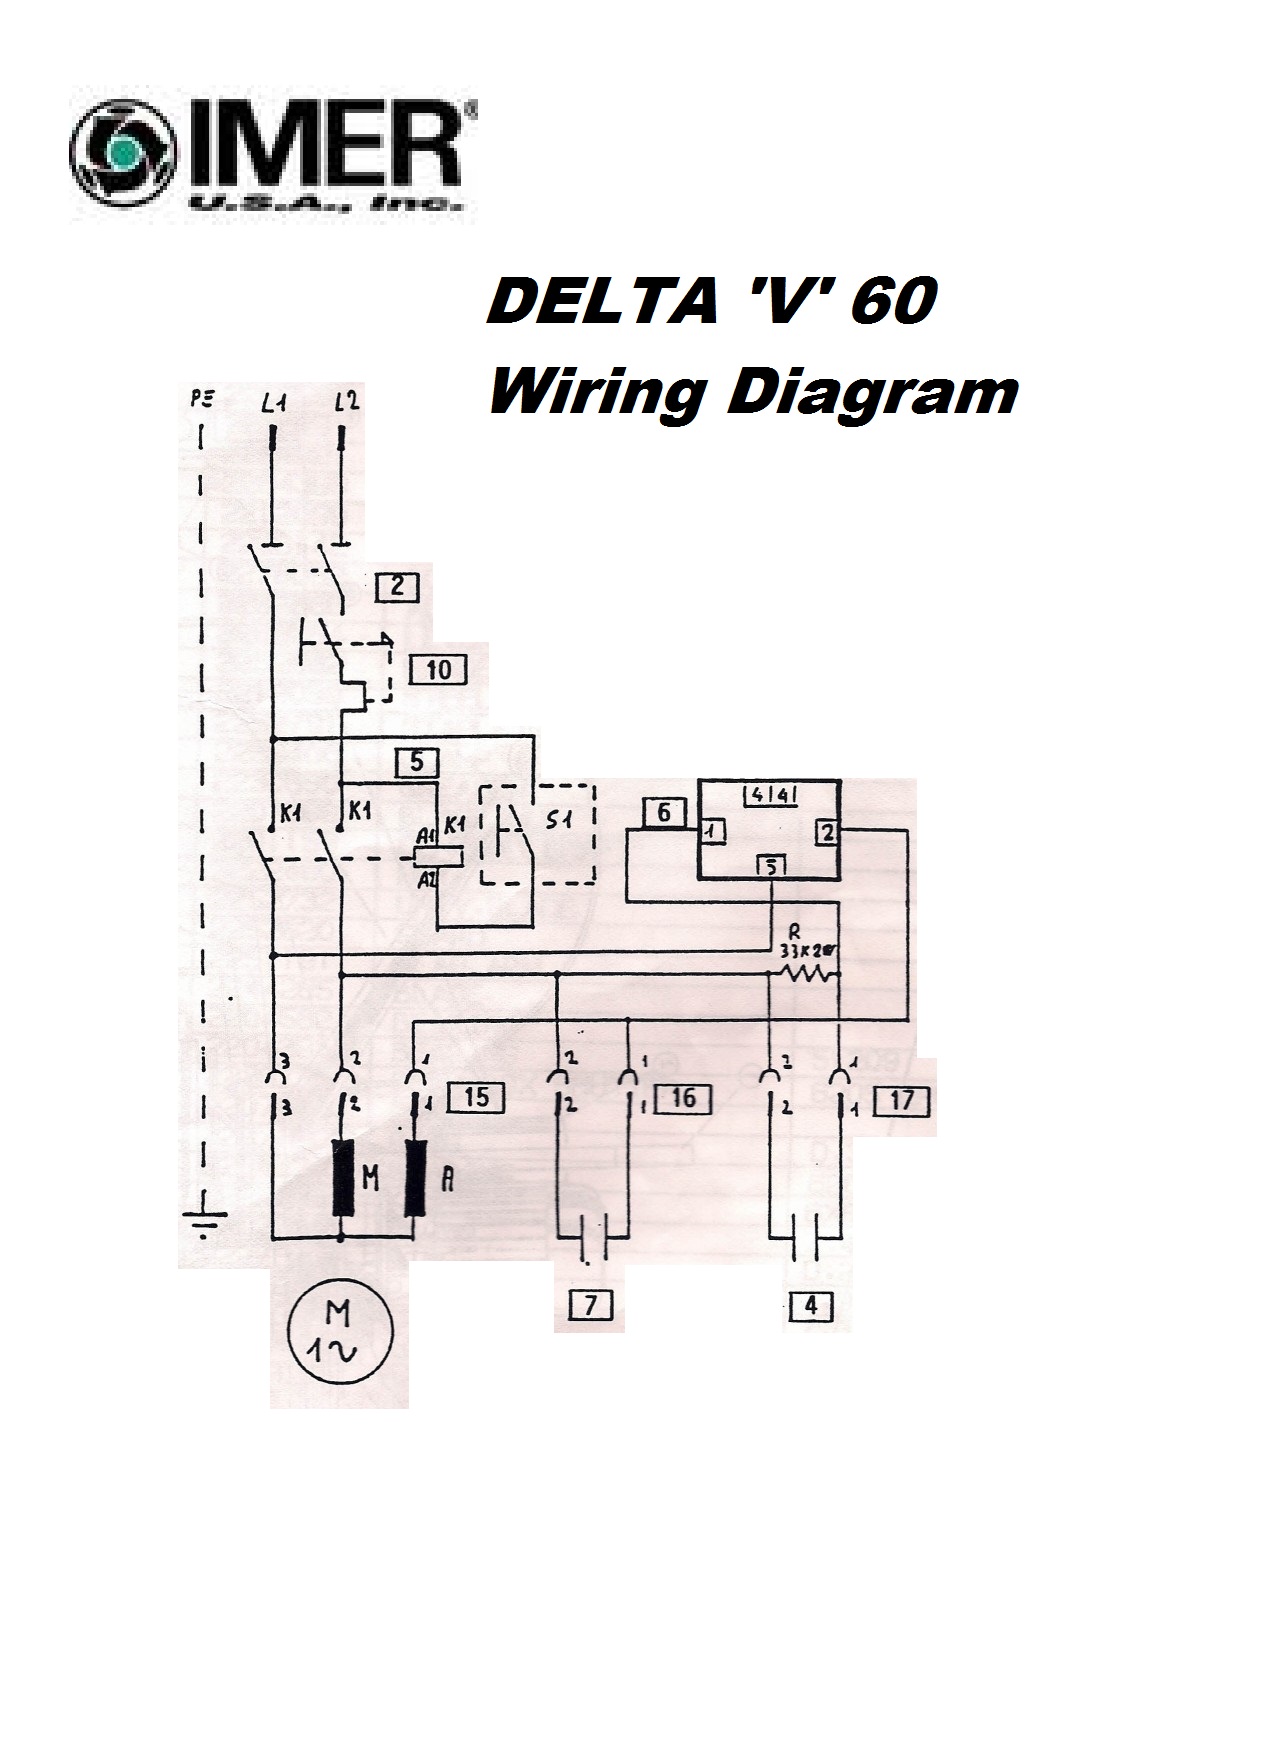 Delta Tools Wiring Diagram Process Flow Diagram Drawer For Wiring Diagram Schematics